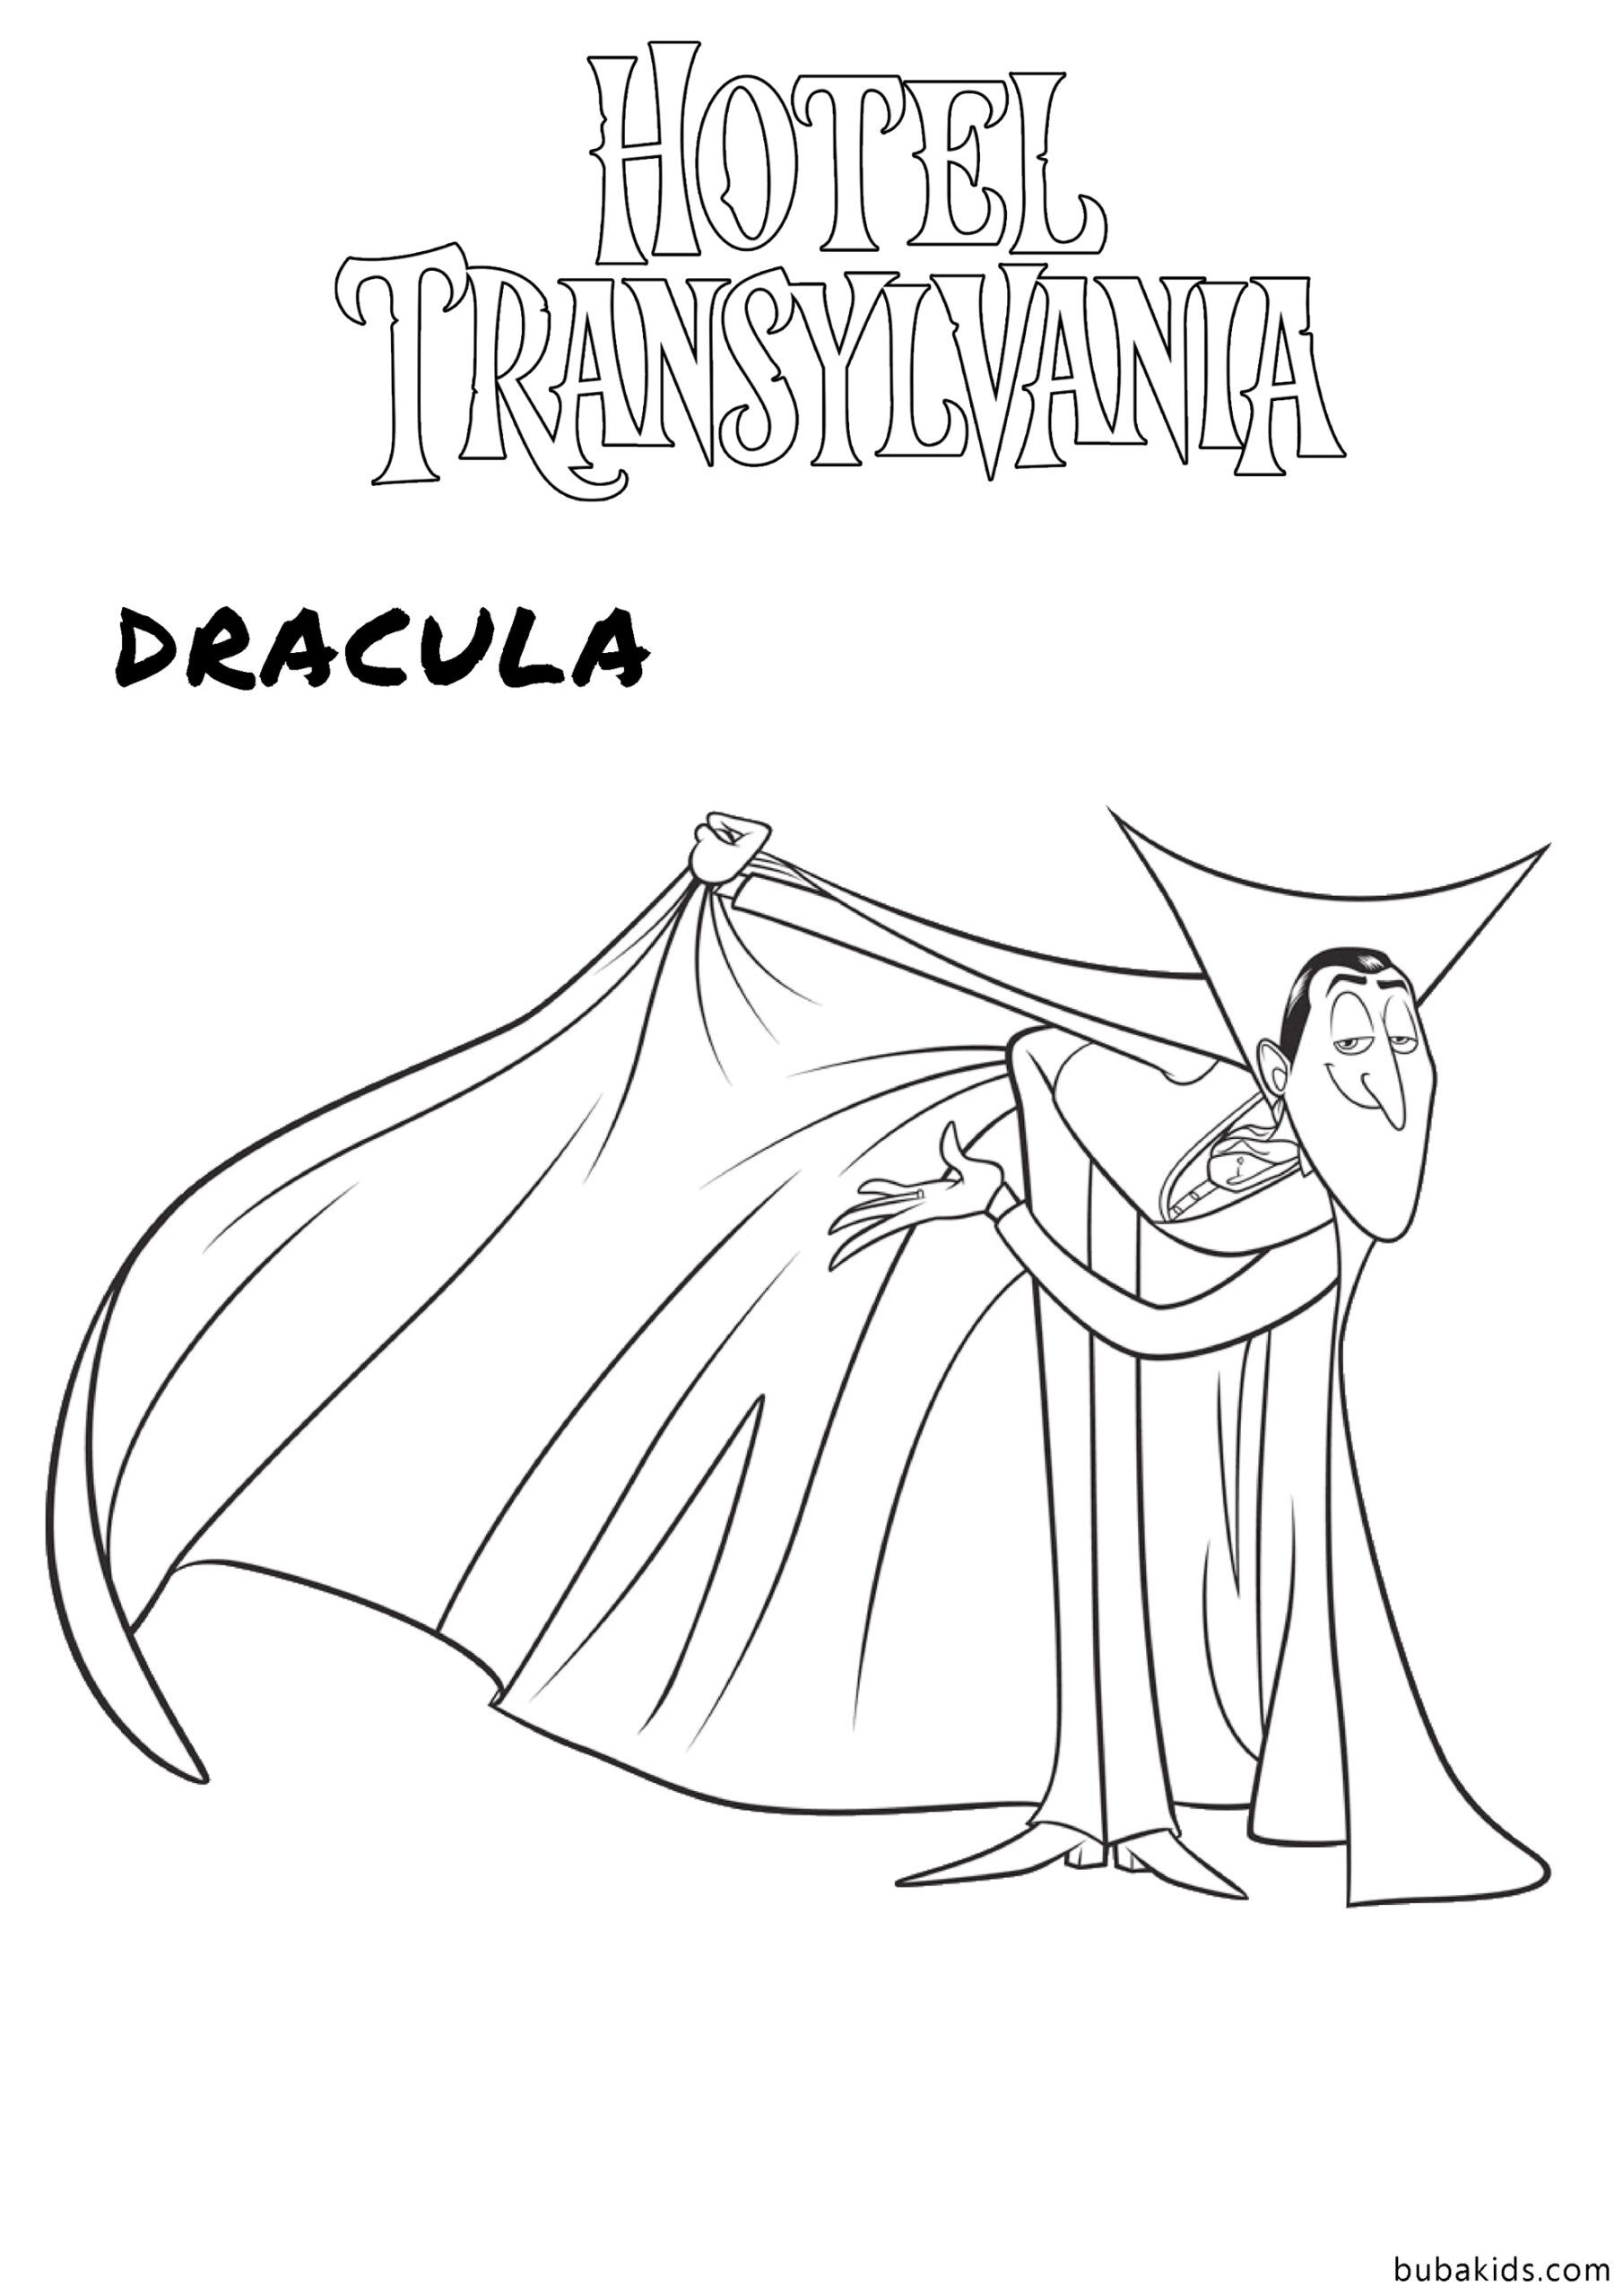 Dracula hotel transylvania 2022 transformania coloring page